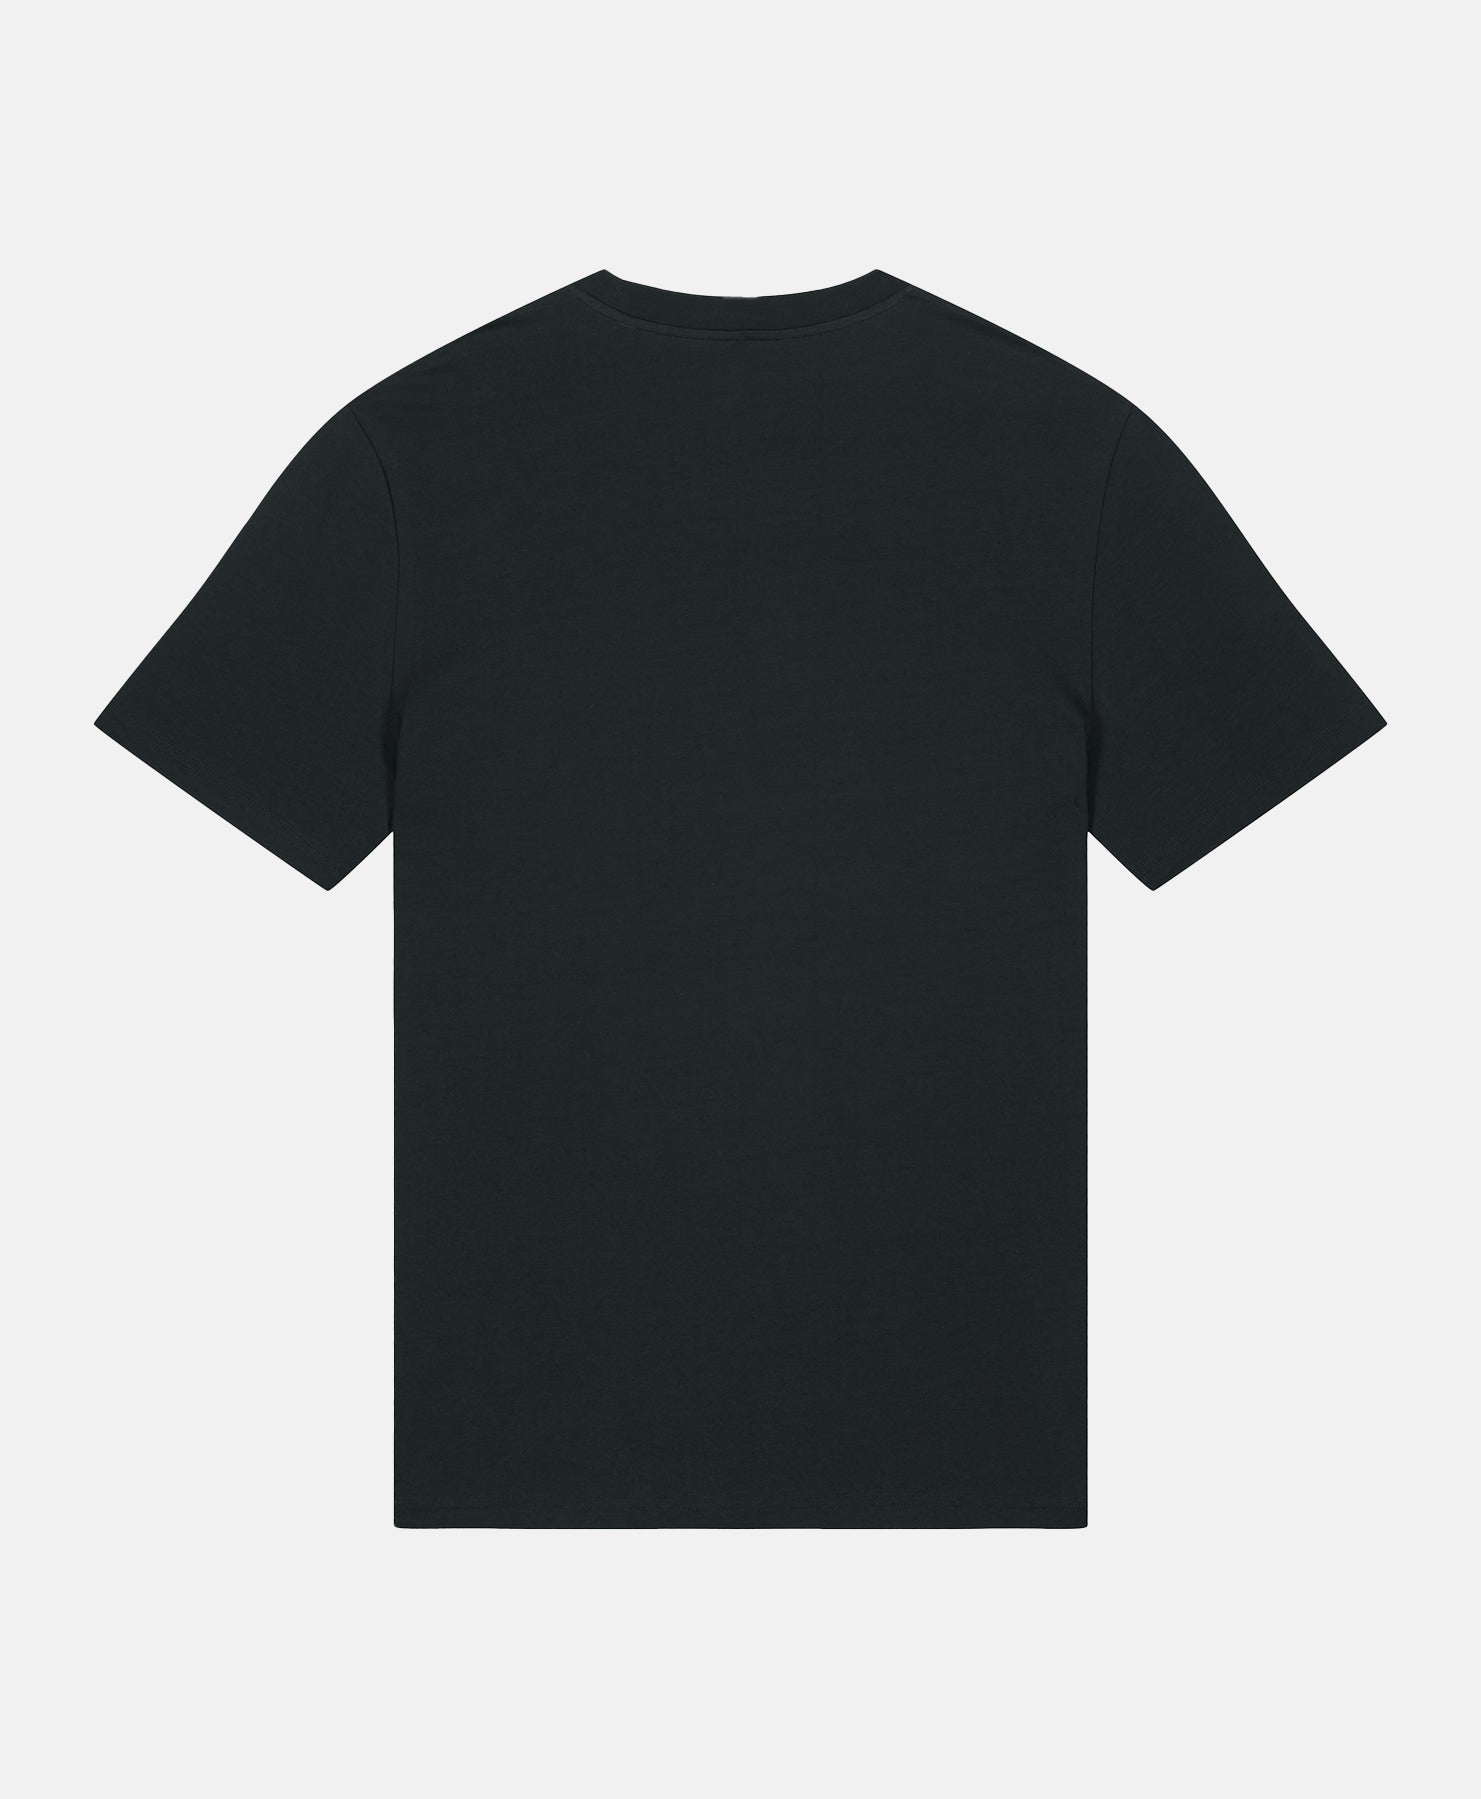 Border Collie T-Shirt Black